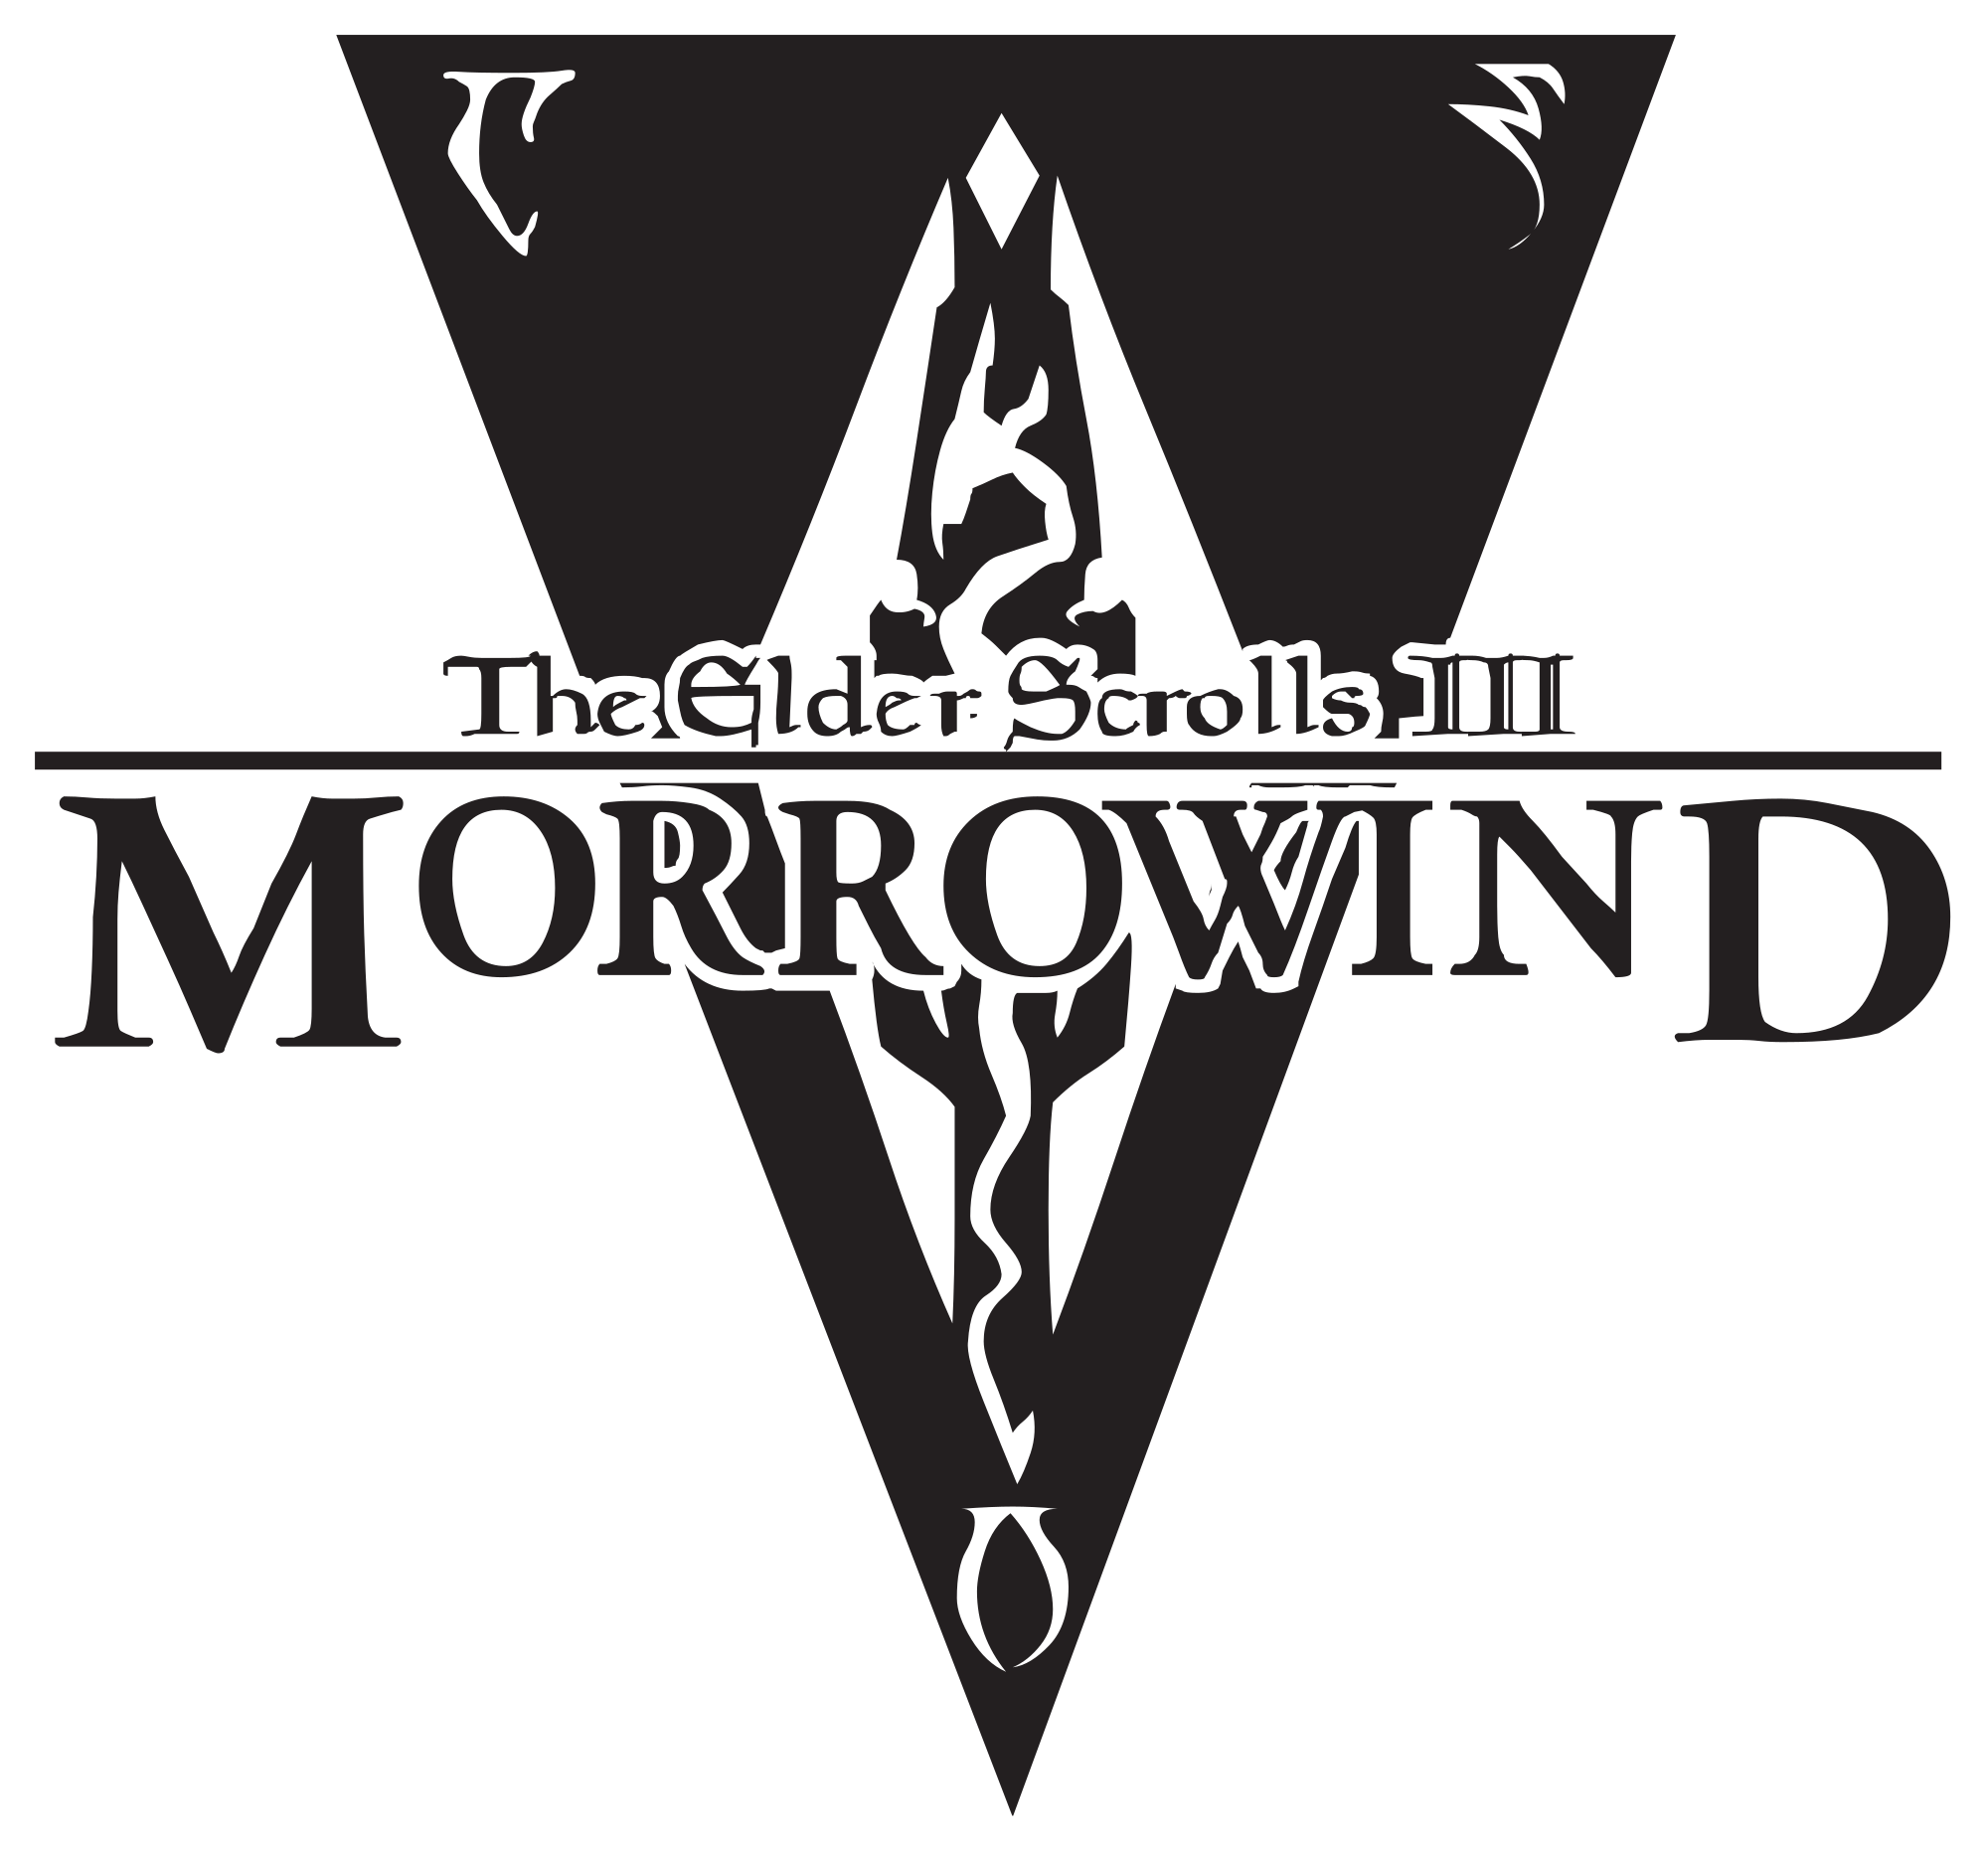 The Elder Scrolls III: Morrowind svg #13, Download drawings